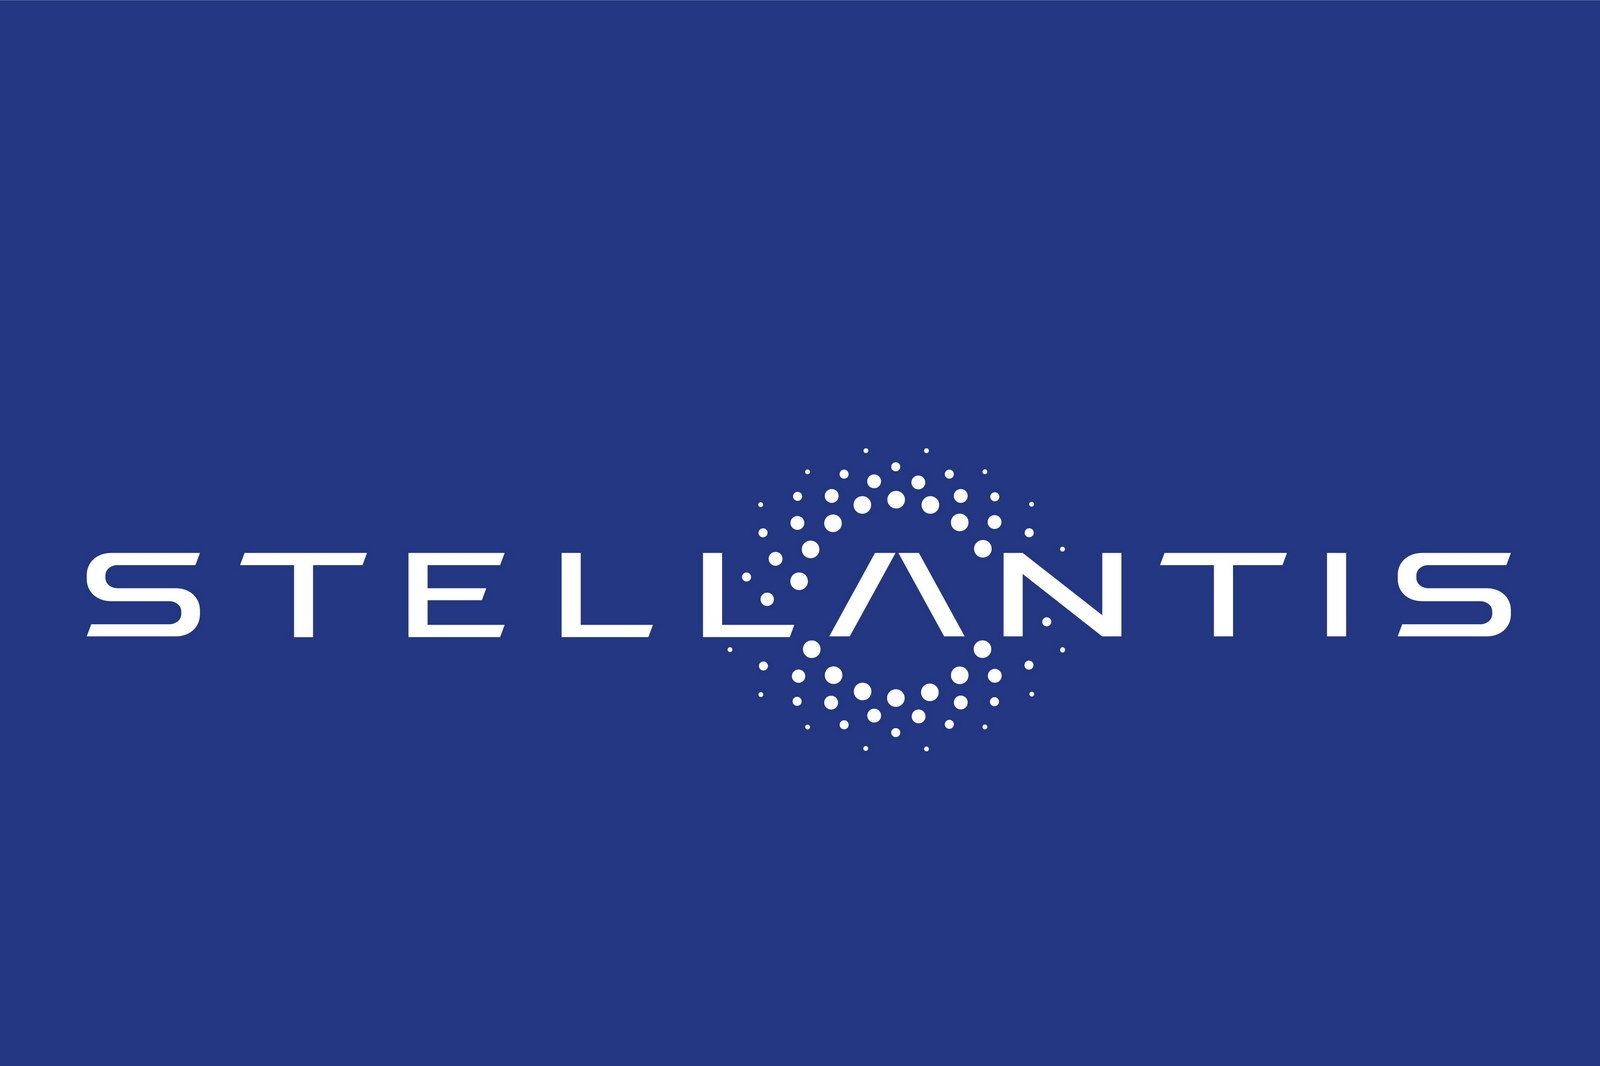 Stellantis logo